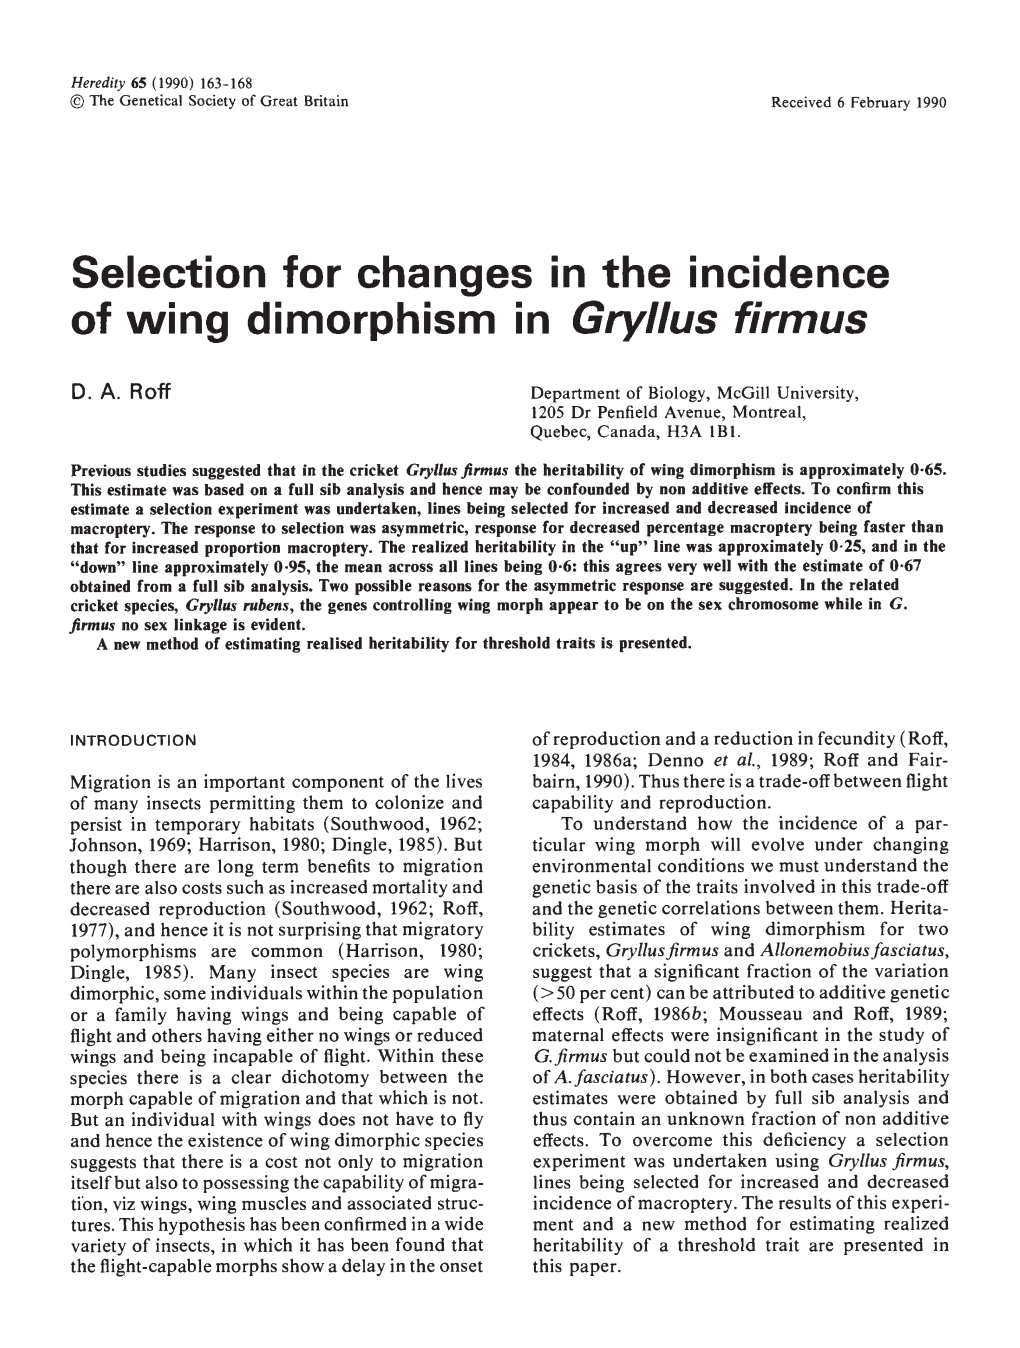 Of Wing Dimorphism in Gryllus Firmus